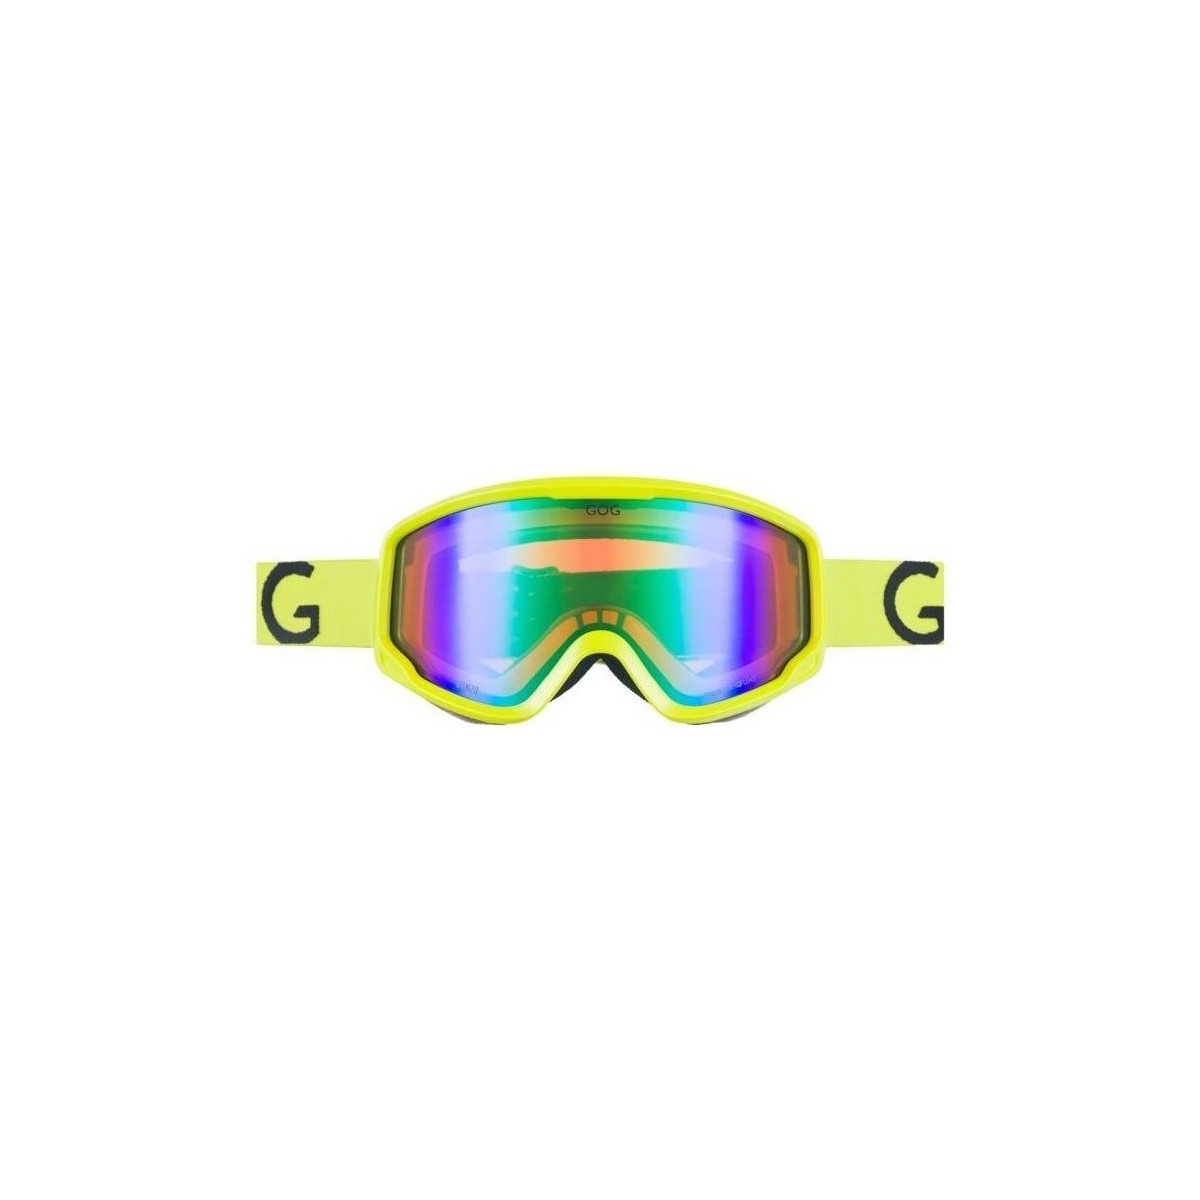 Accesorii Femei Accesorii sport Goggle Gog Gonzo galben